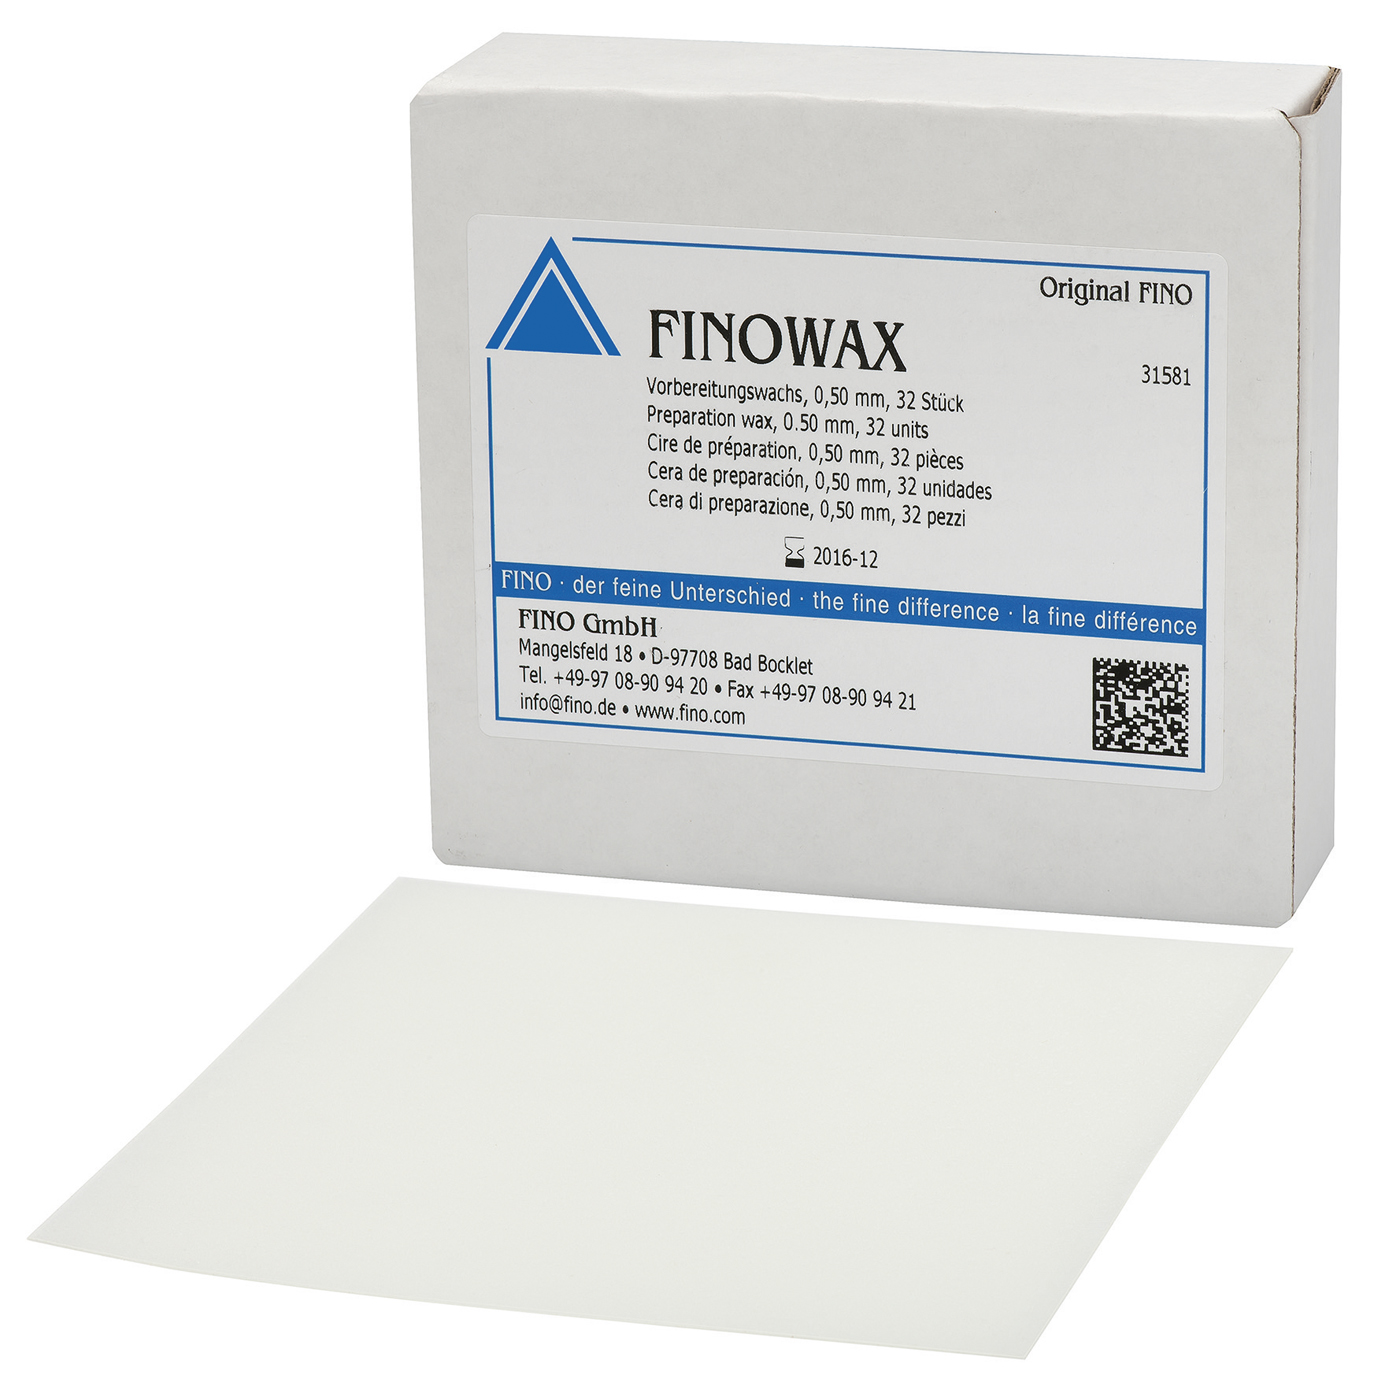 FINOWAX Preparation Wax, 0.50 mm - 32 pieces